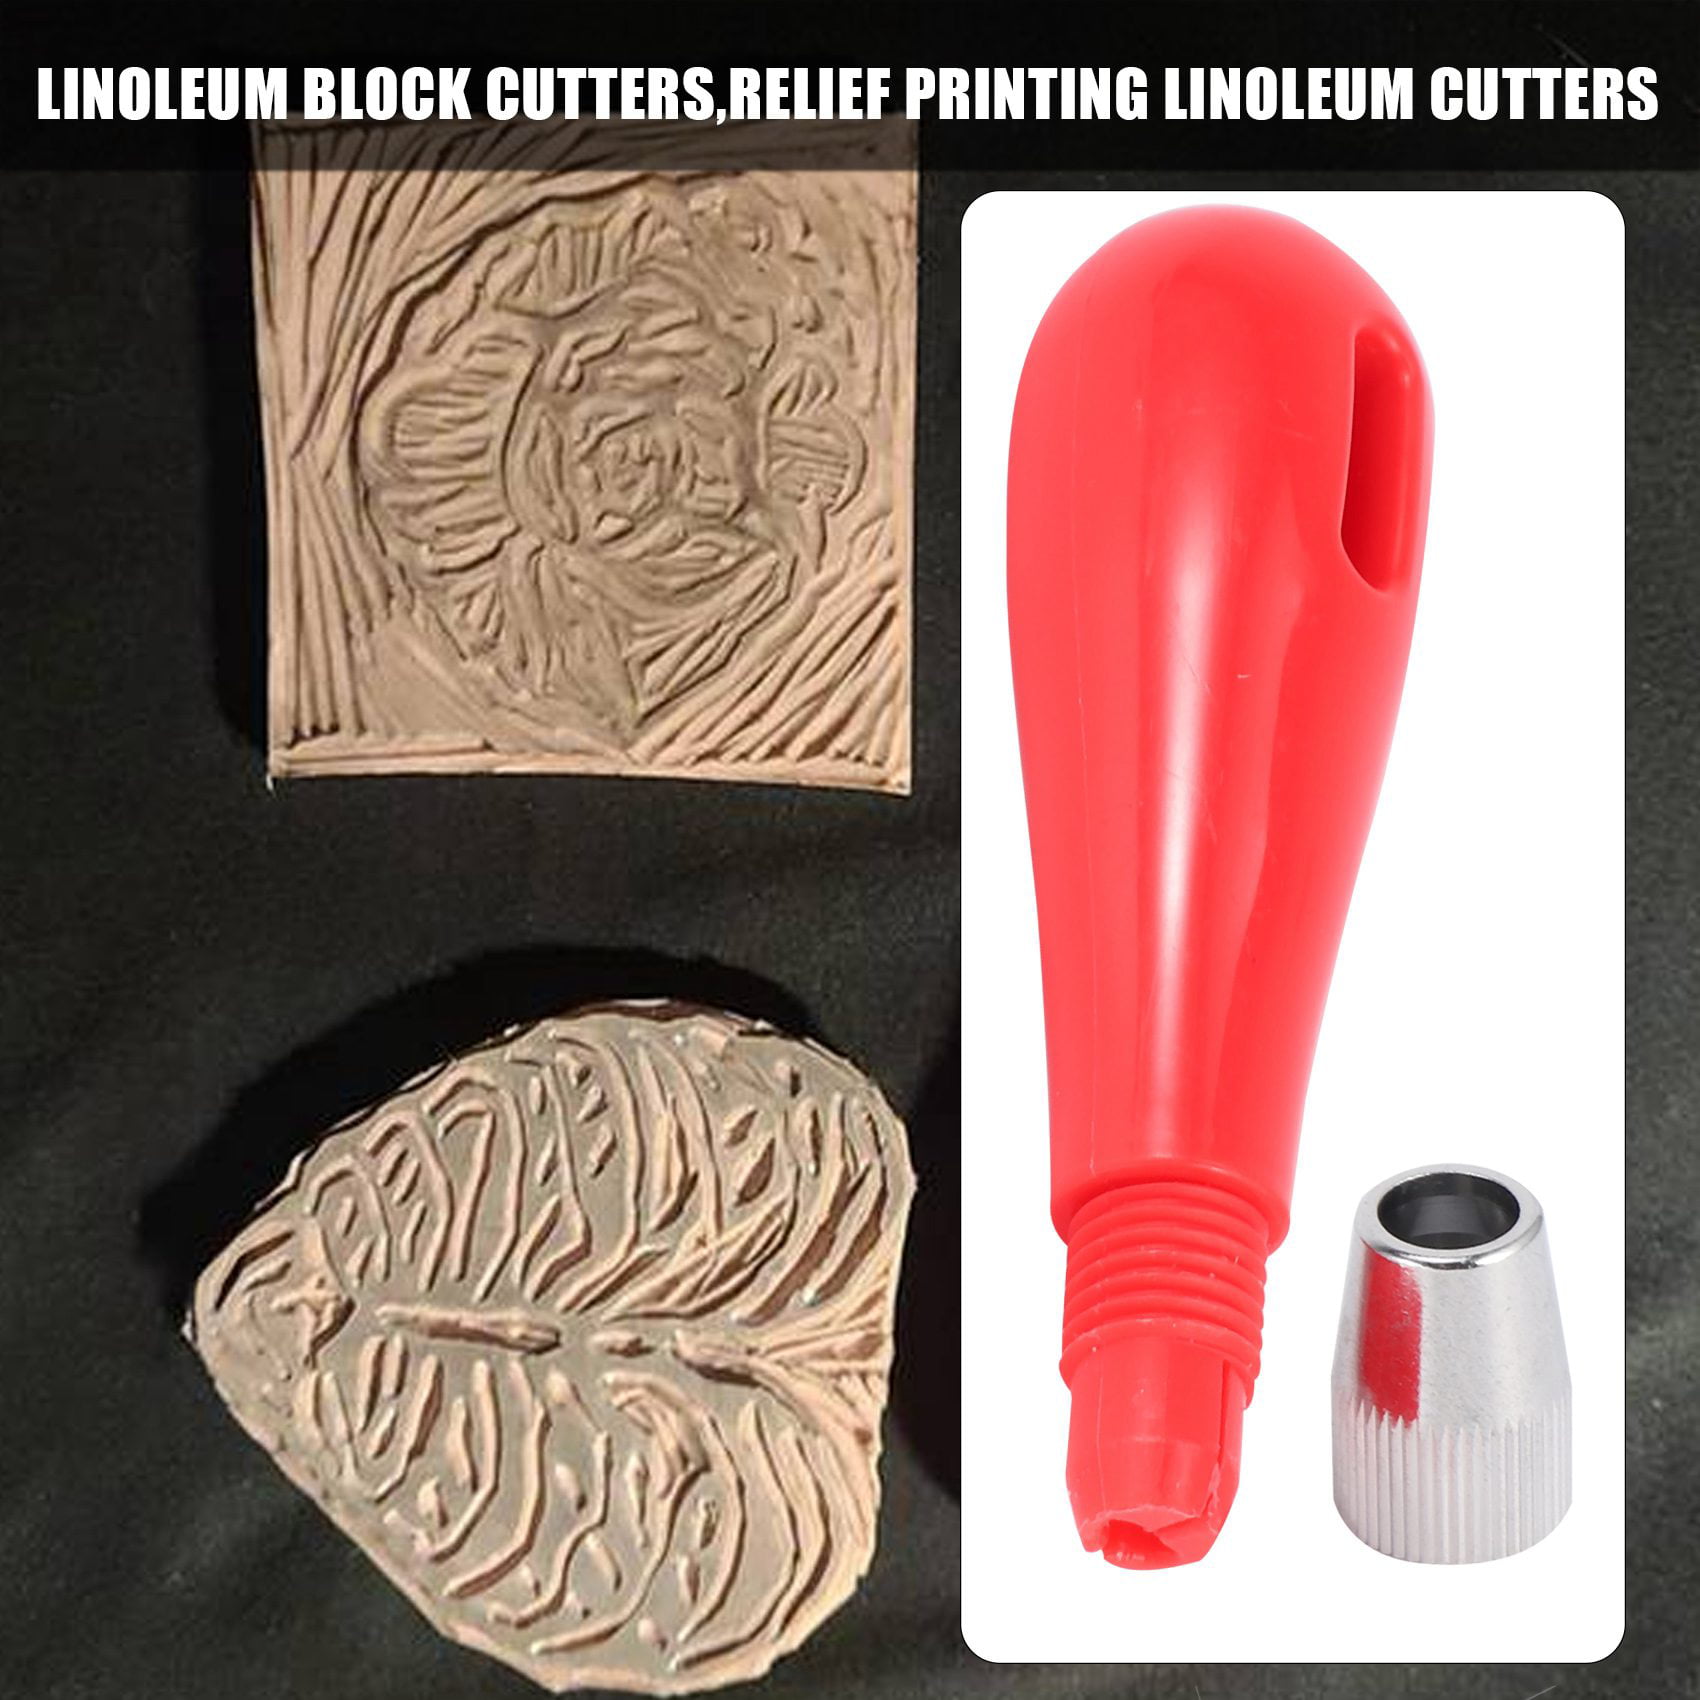 Linoleum Knife, 2 Set Linoleum Cutter Block Cutters Linocut Cutting Tool  Craft Linoleum Carving Tools with 6 Type Blades for Linoleum Block Printing